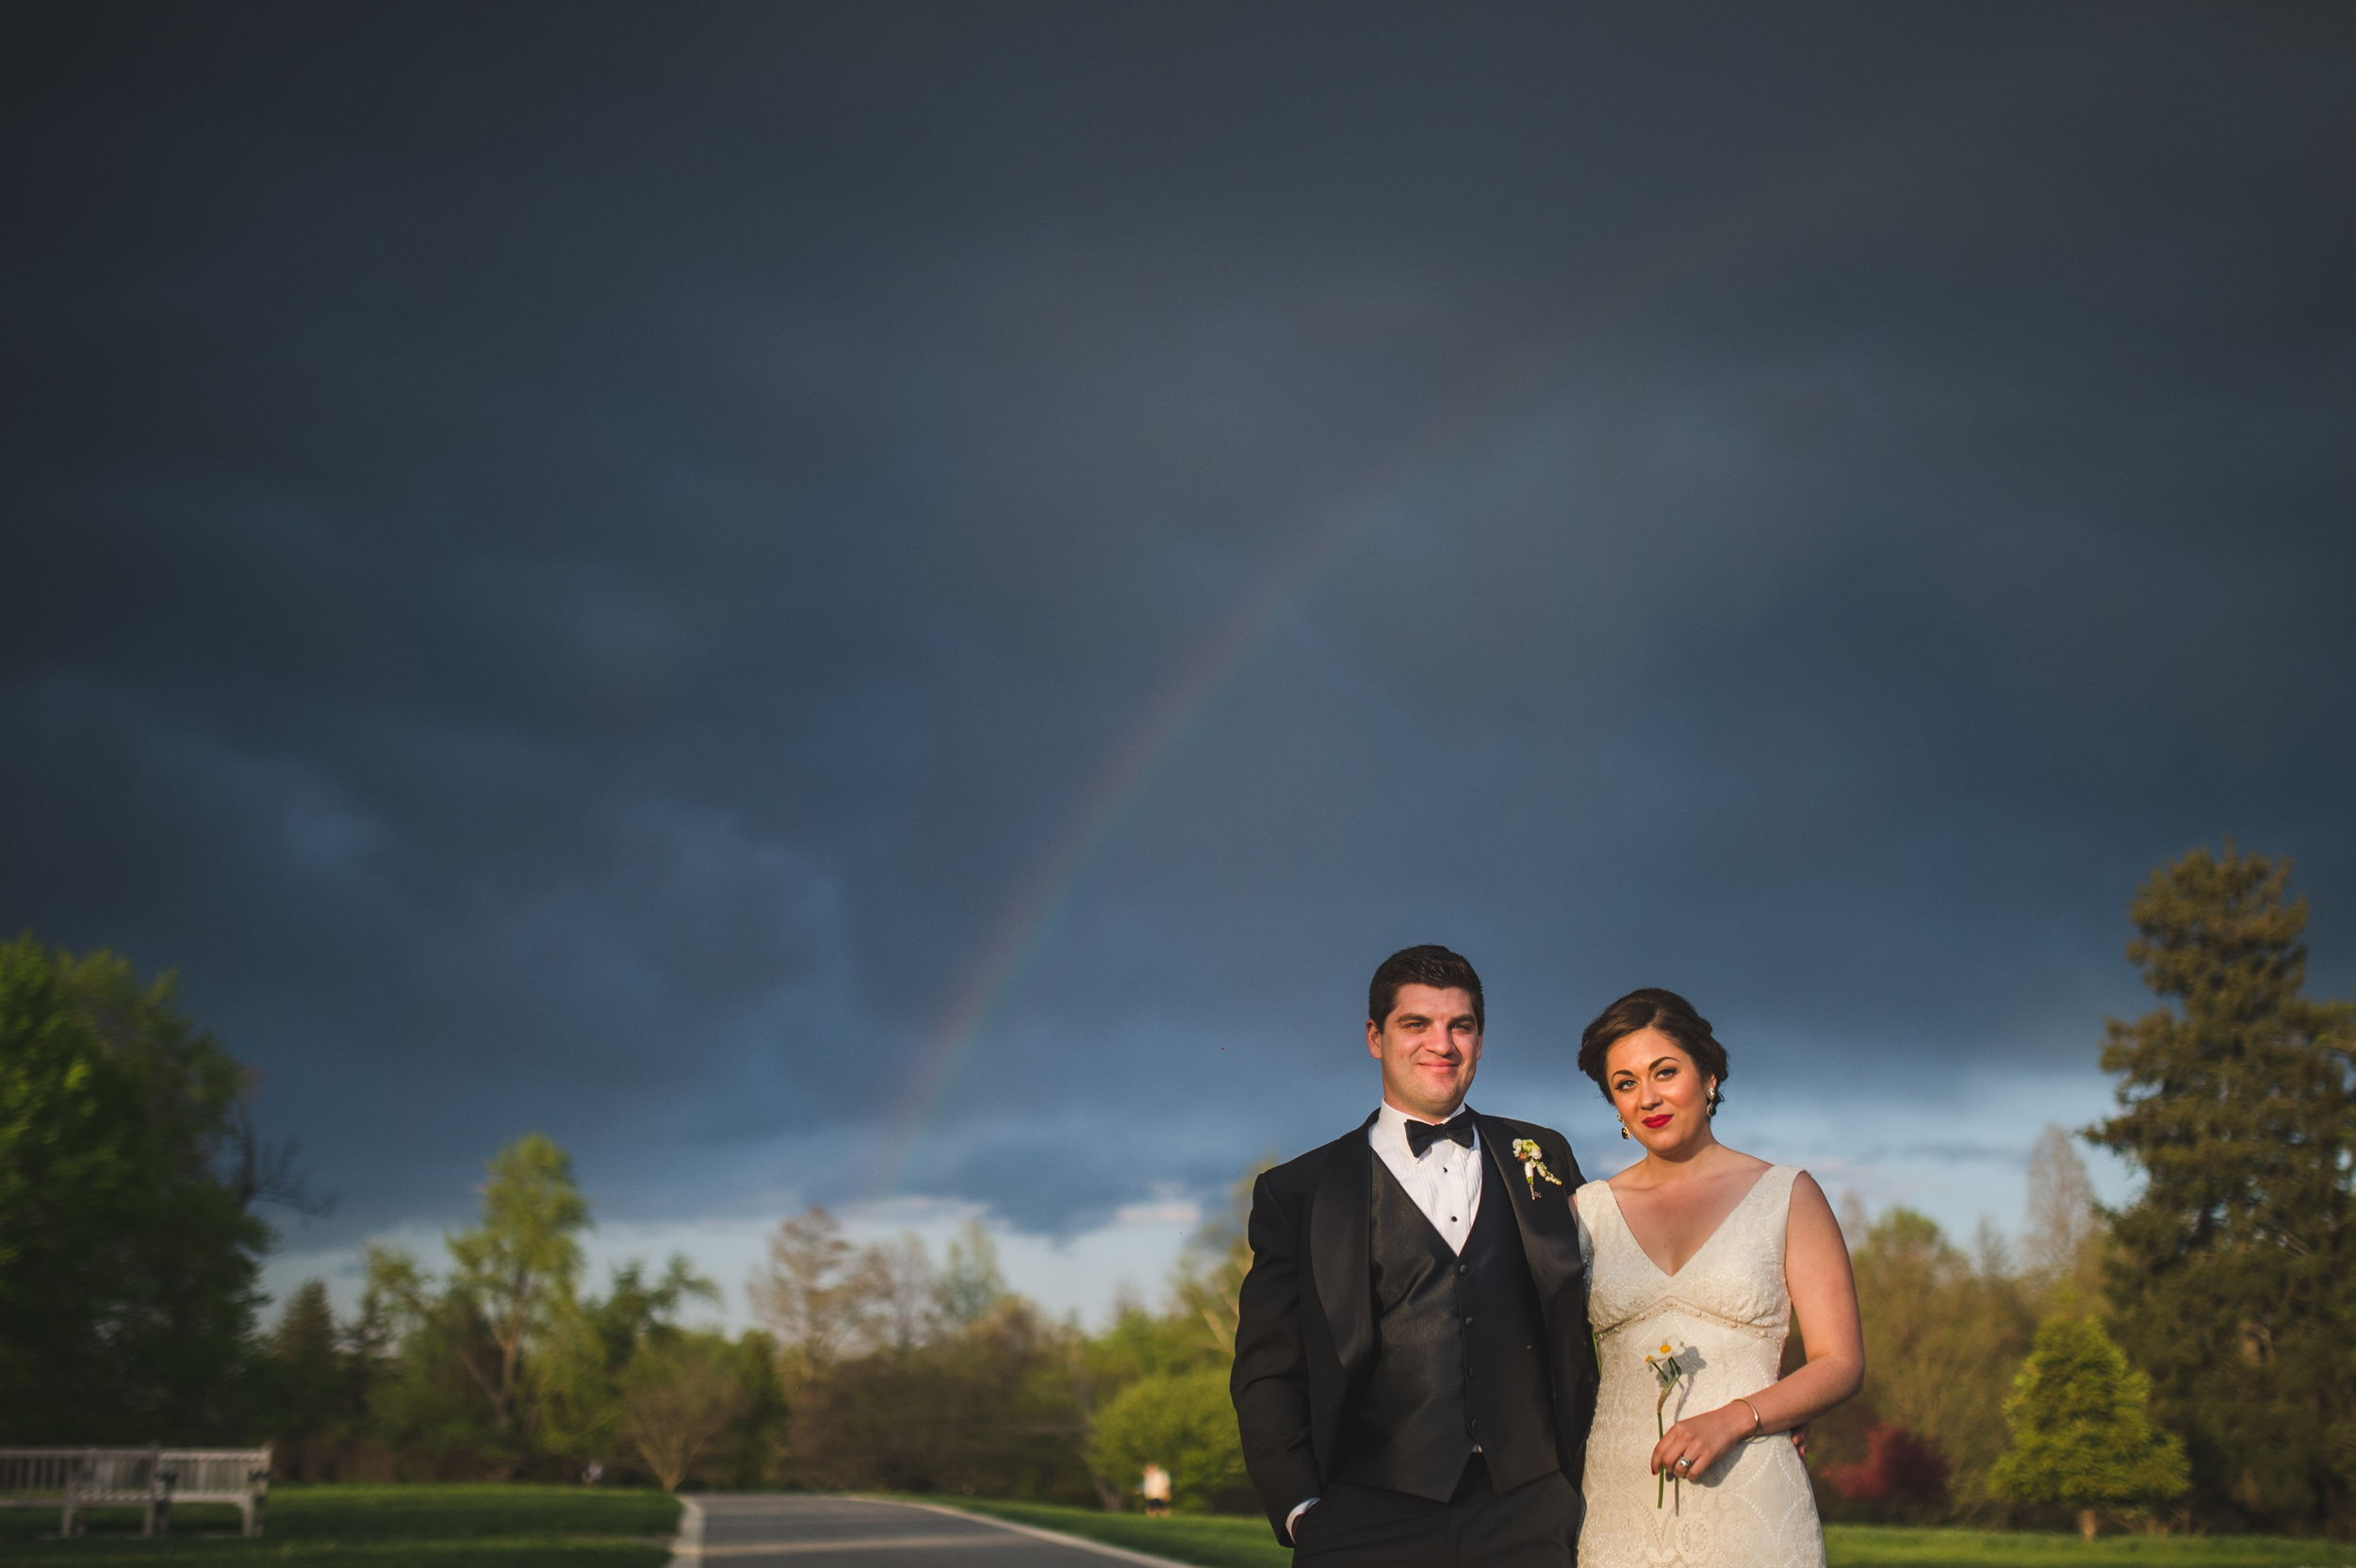 Photojournalistic wedding photography Baltimore MD By Mantas Kubilinskas-32.jpg